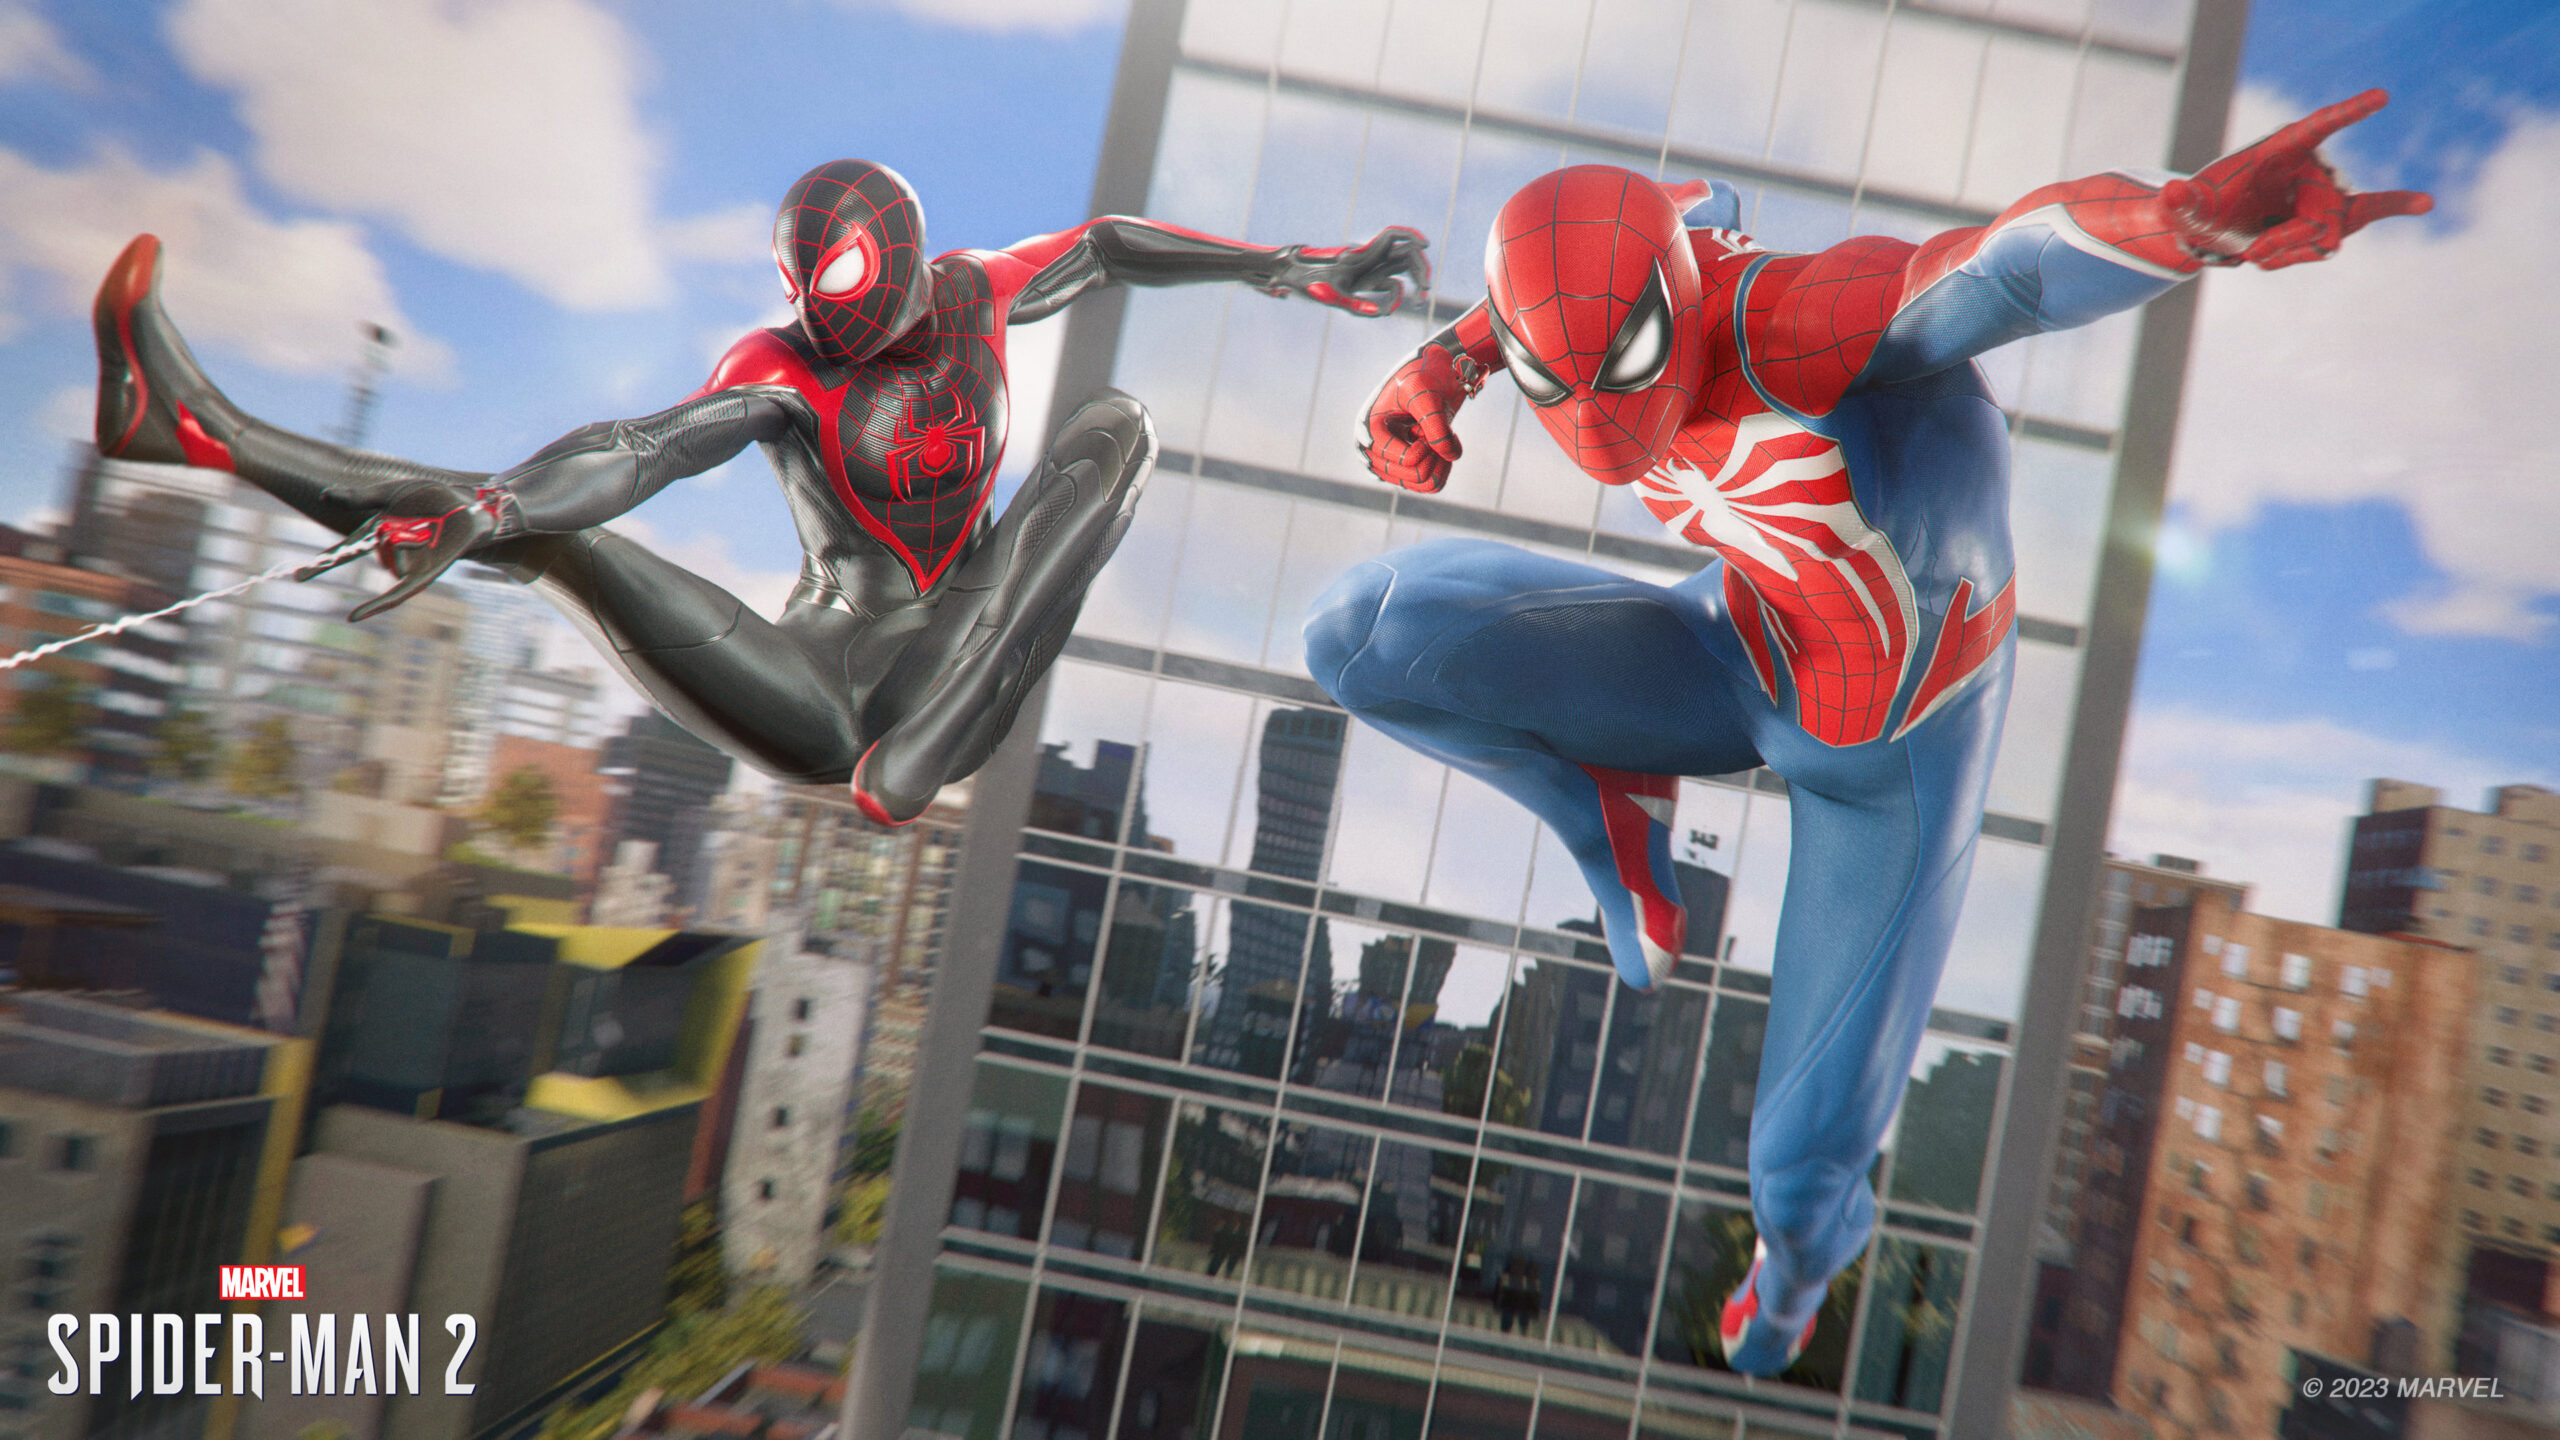 Marvel's Spider-Man 2 promises a bigger open world